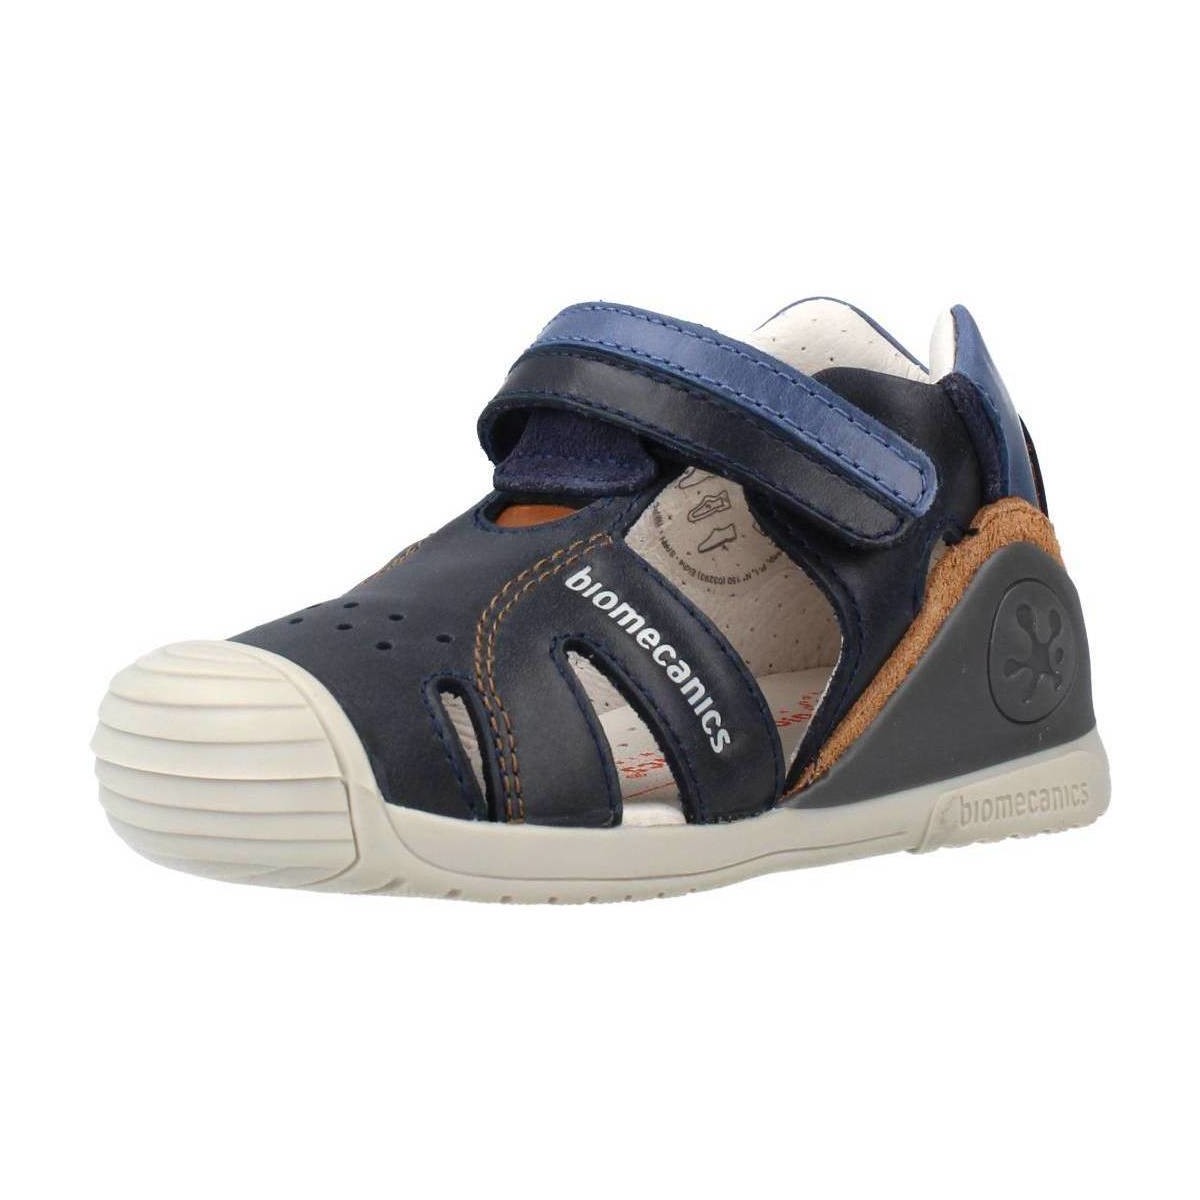 Topánky Chlapec Sandále Biomecanics URBAN Modrá